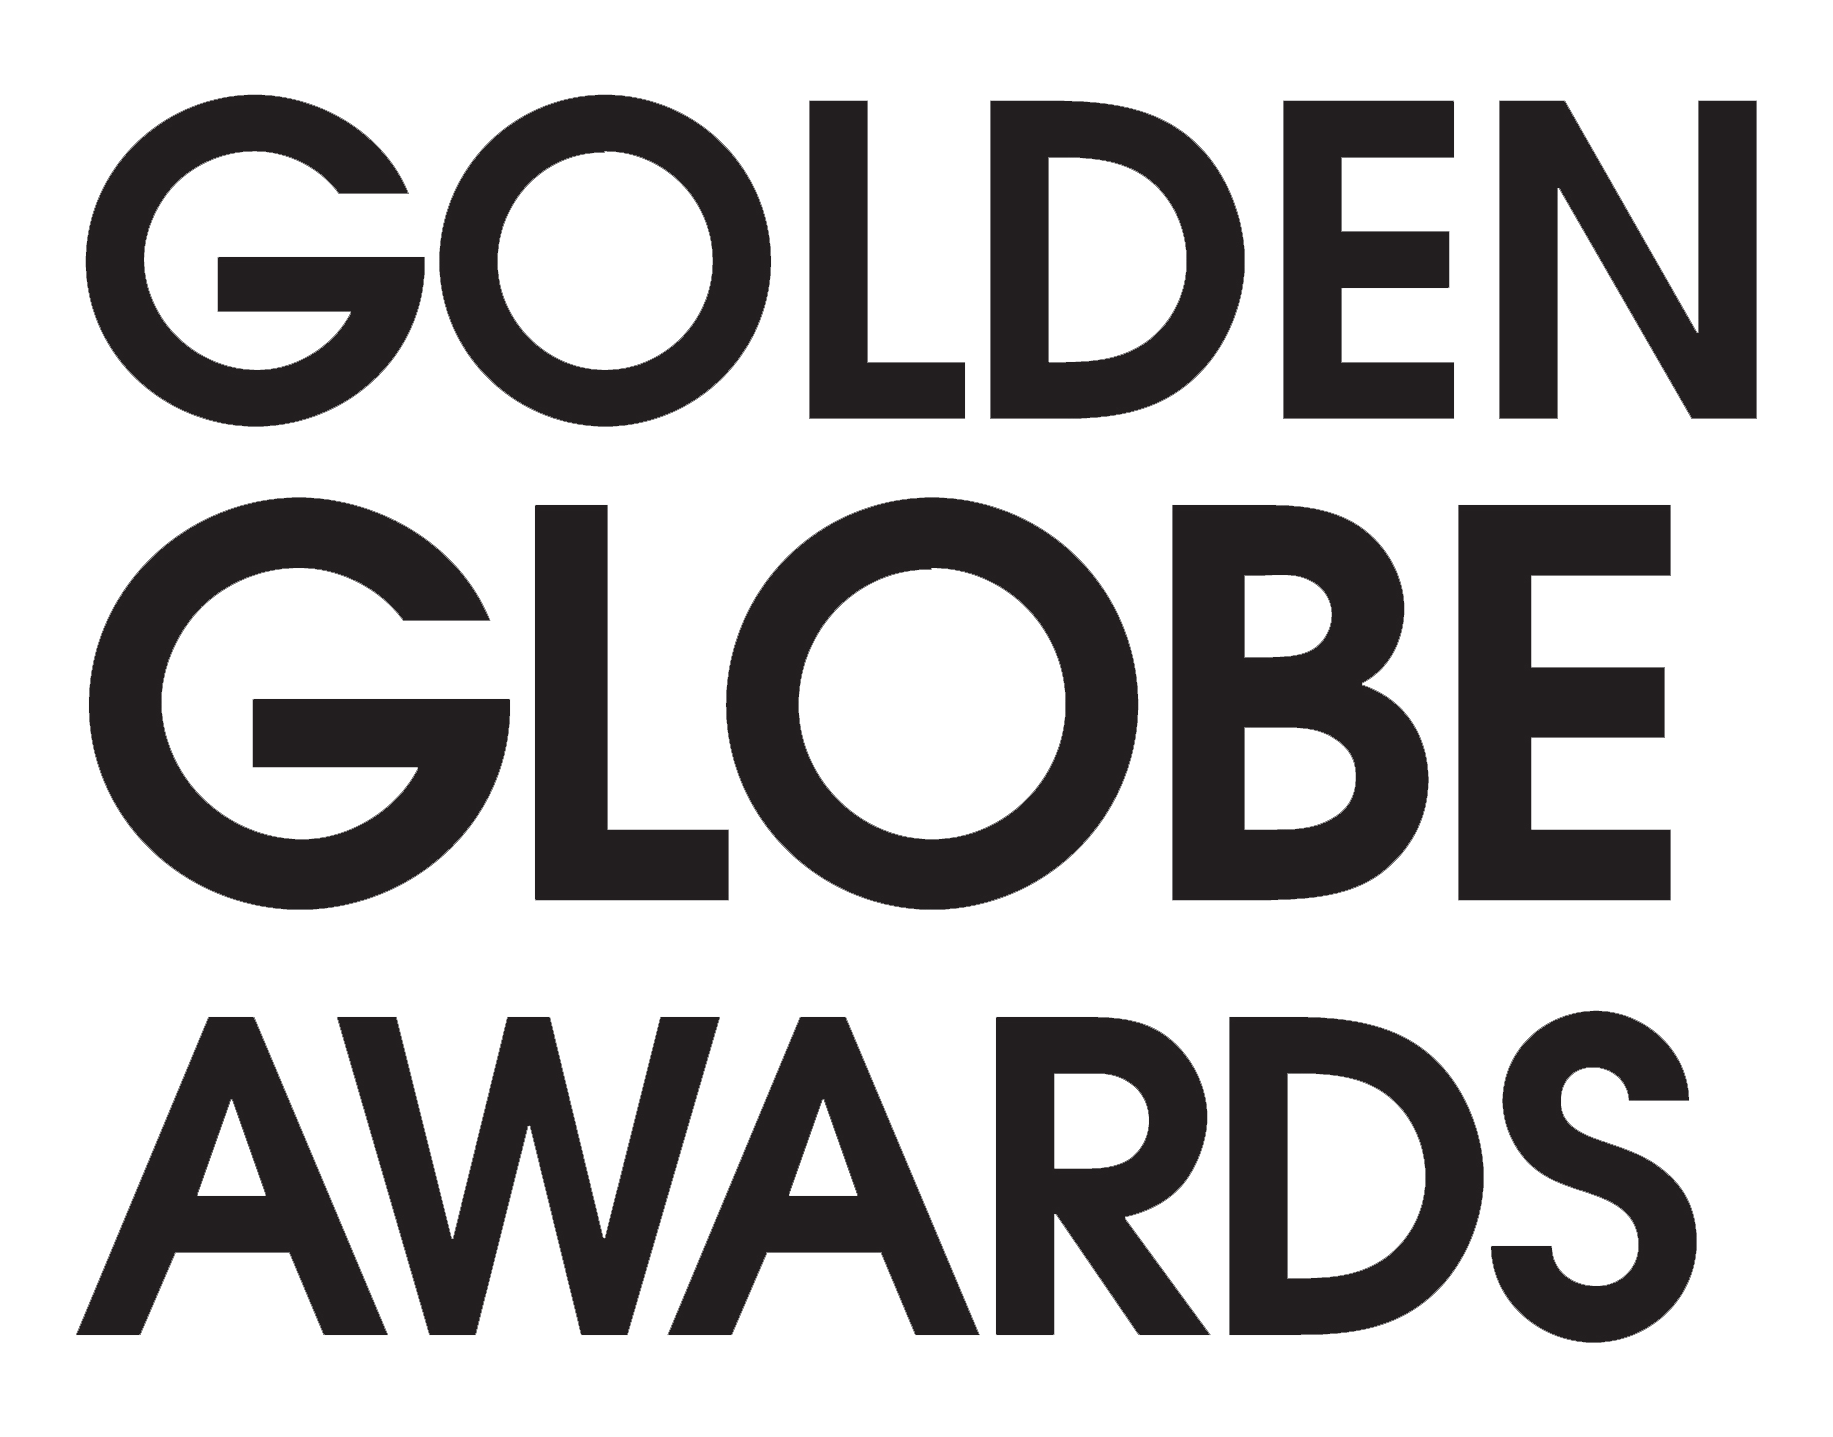 Oval Globe Logo - File:Golden Globe text logo.png - Wikimedia Commons